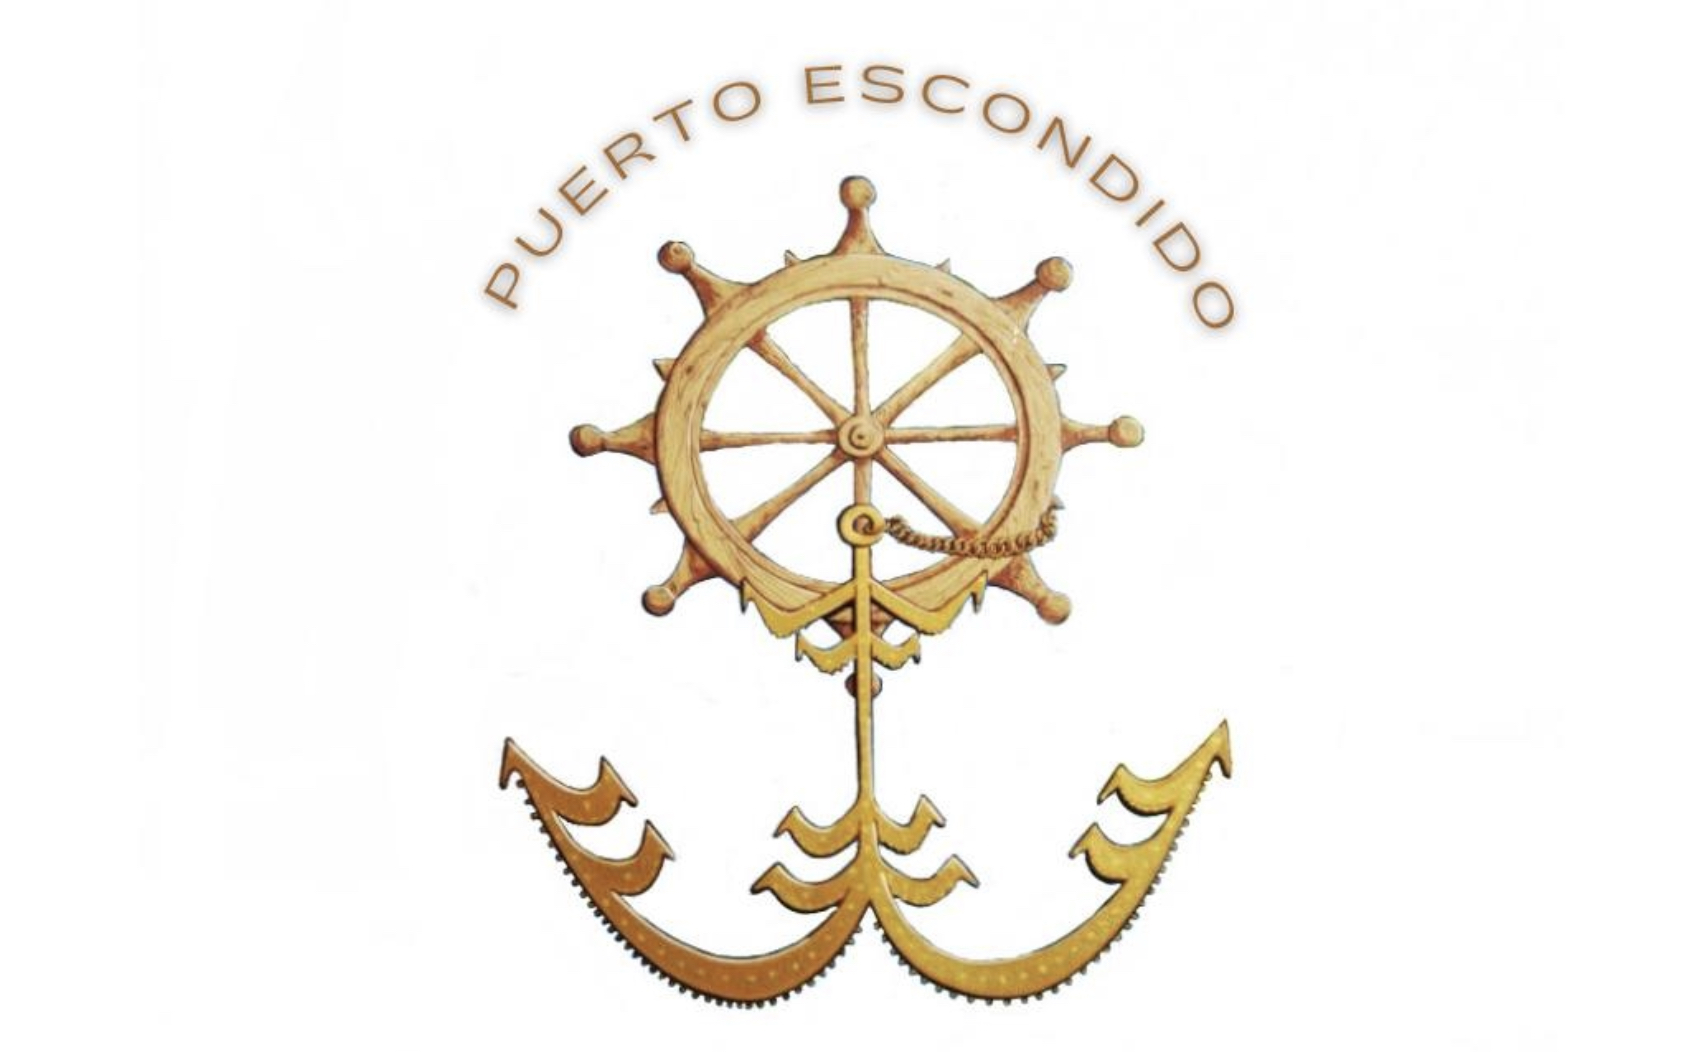 Puerto Escondido logo